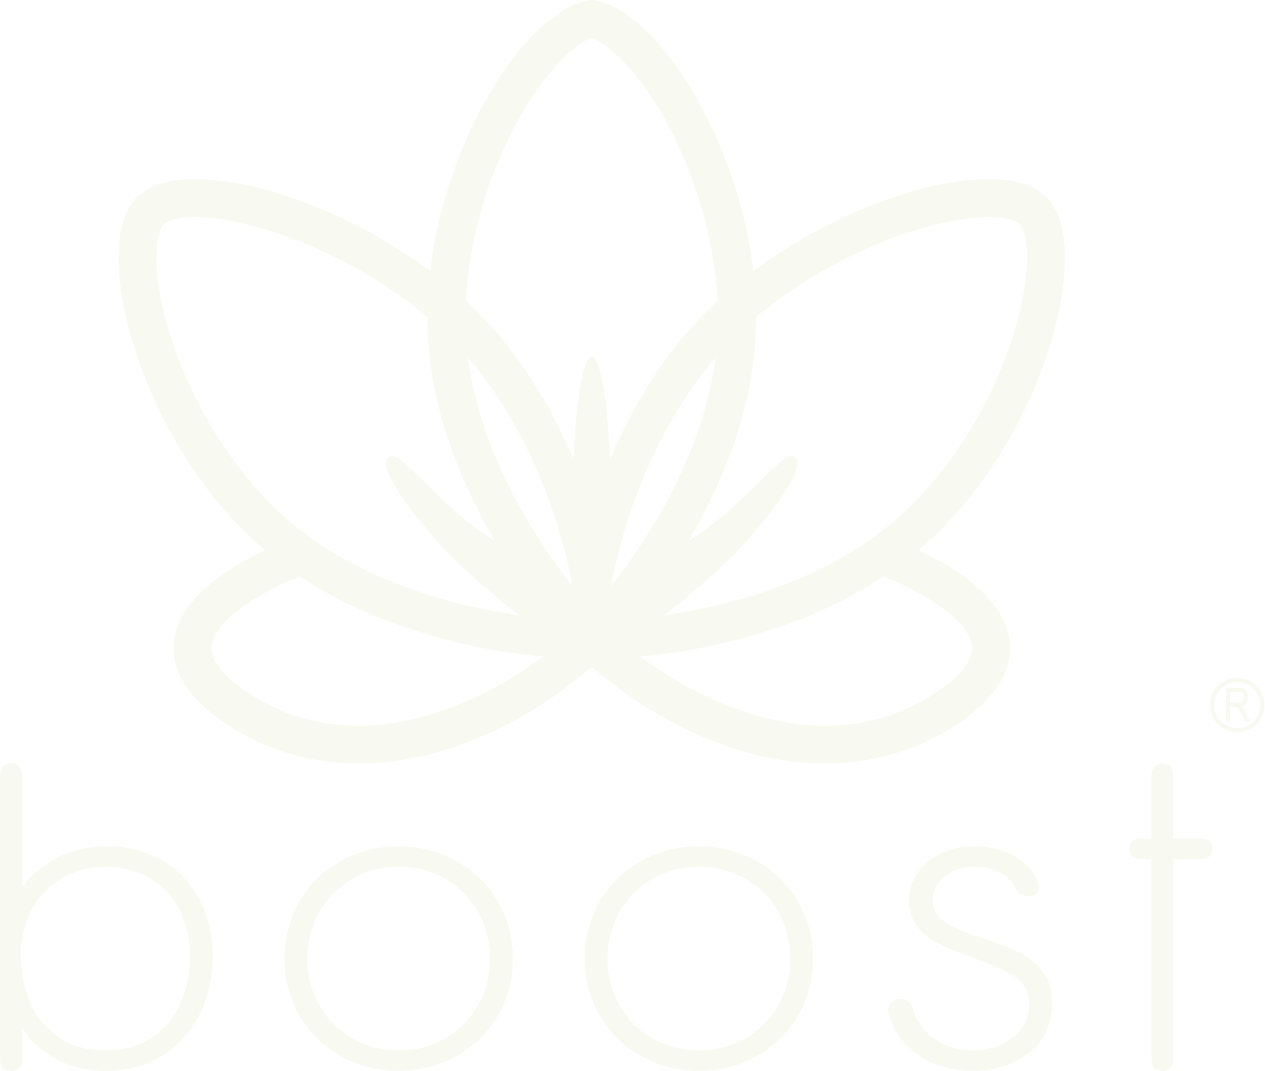 Boost Logo